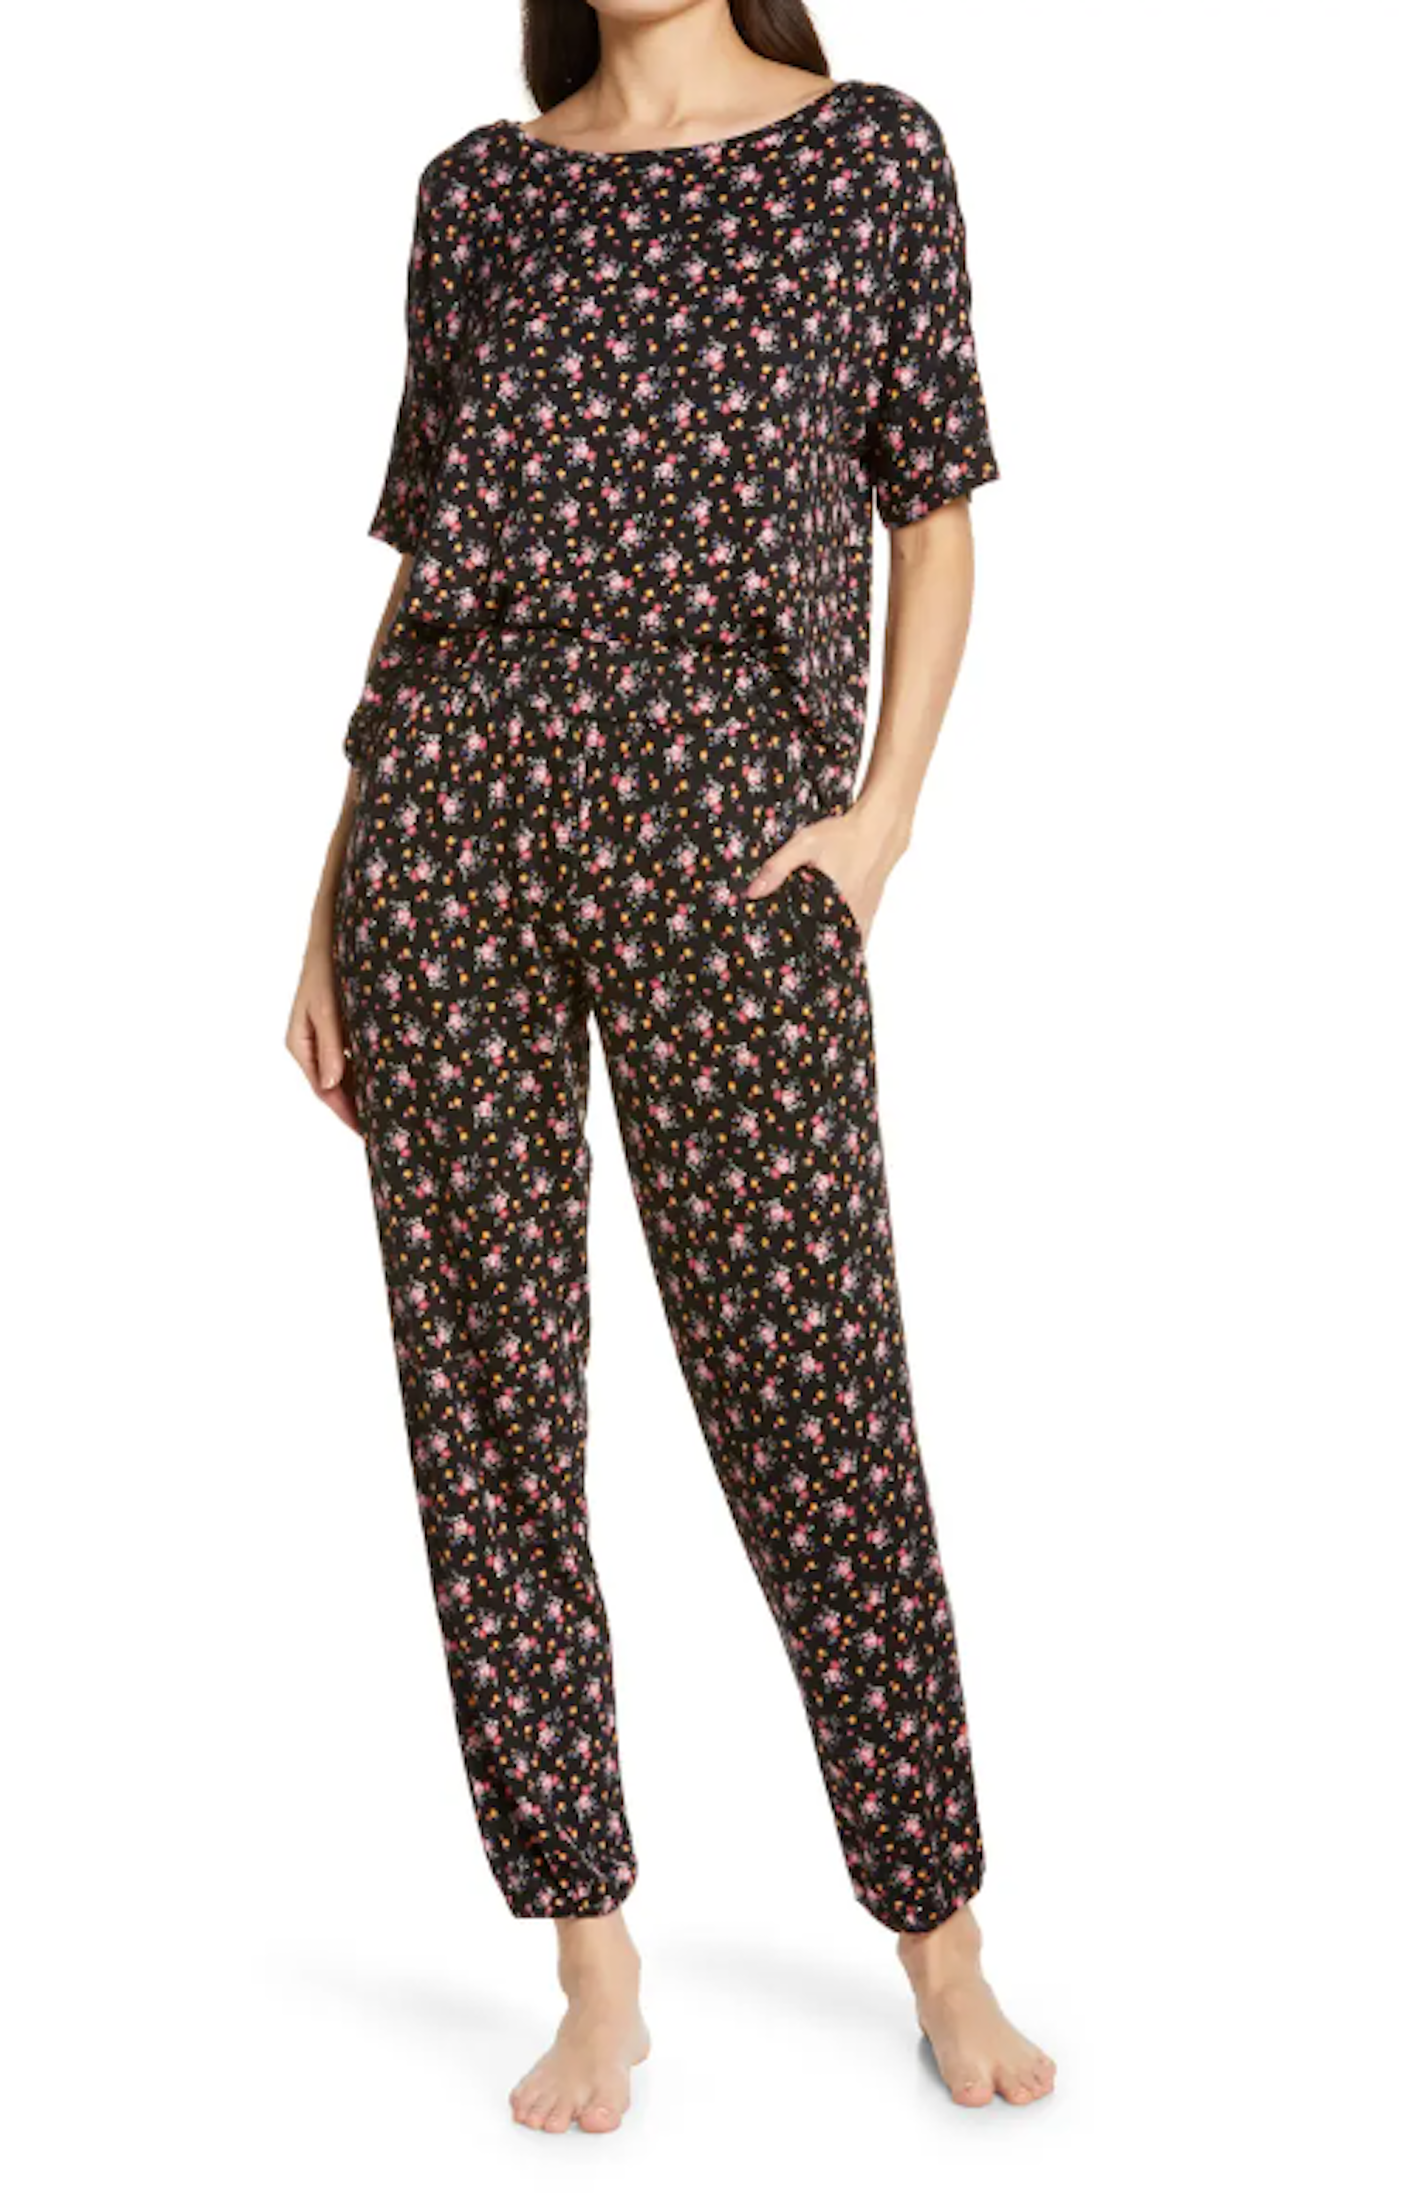 woman wearing a floral pajama set